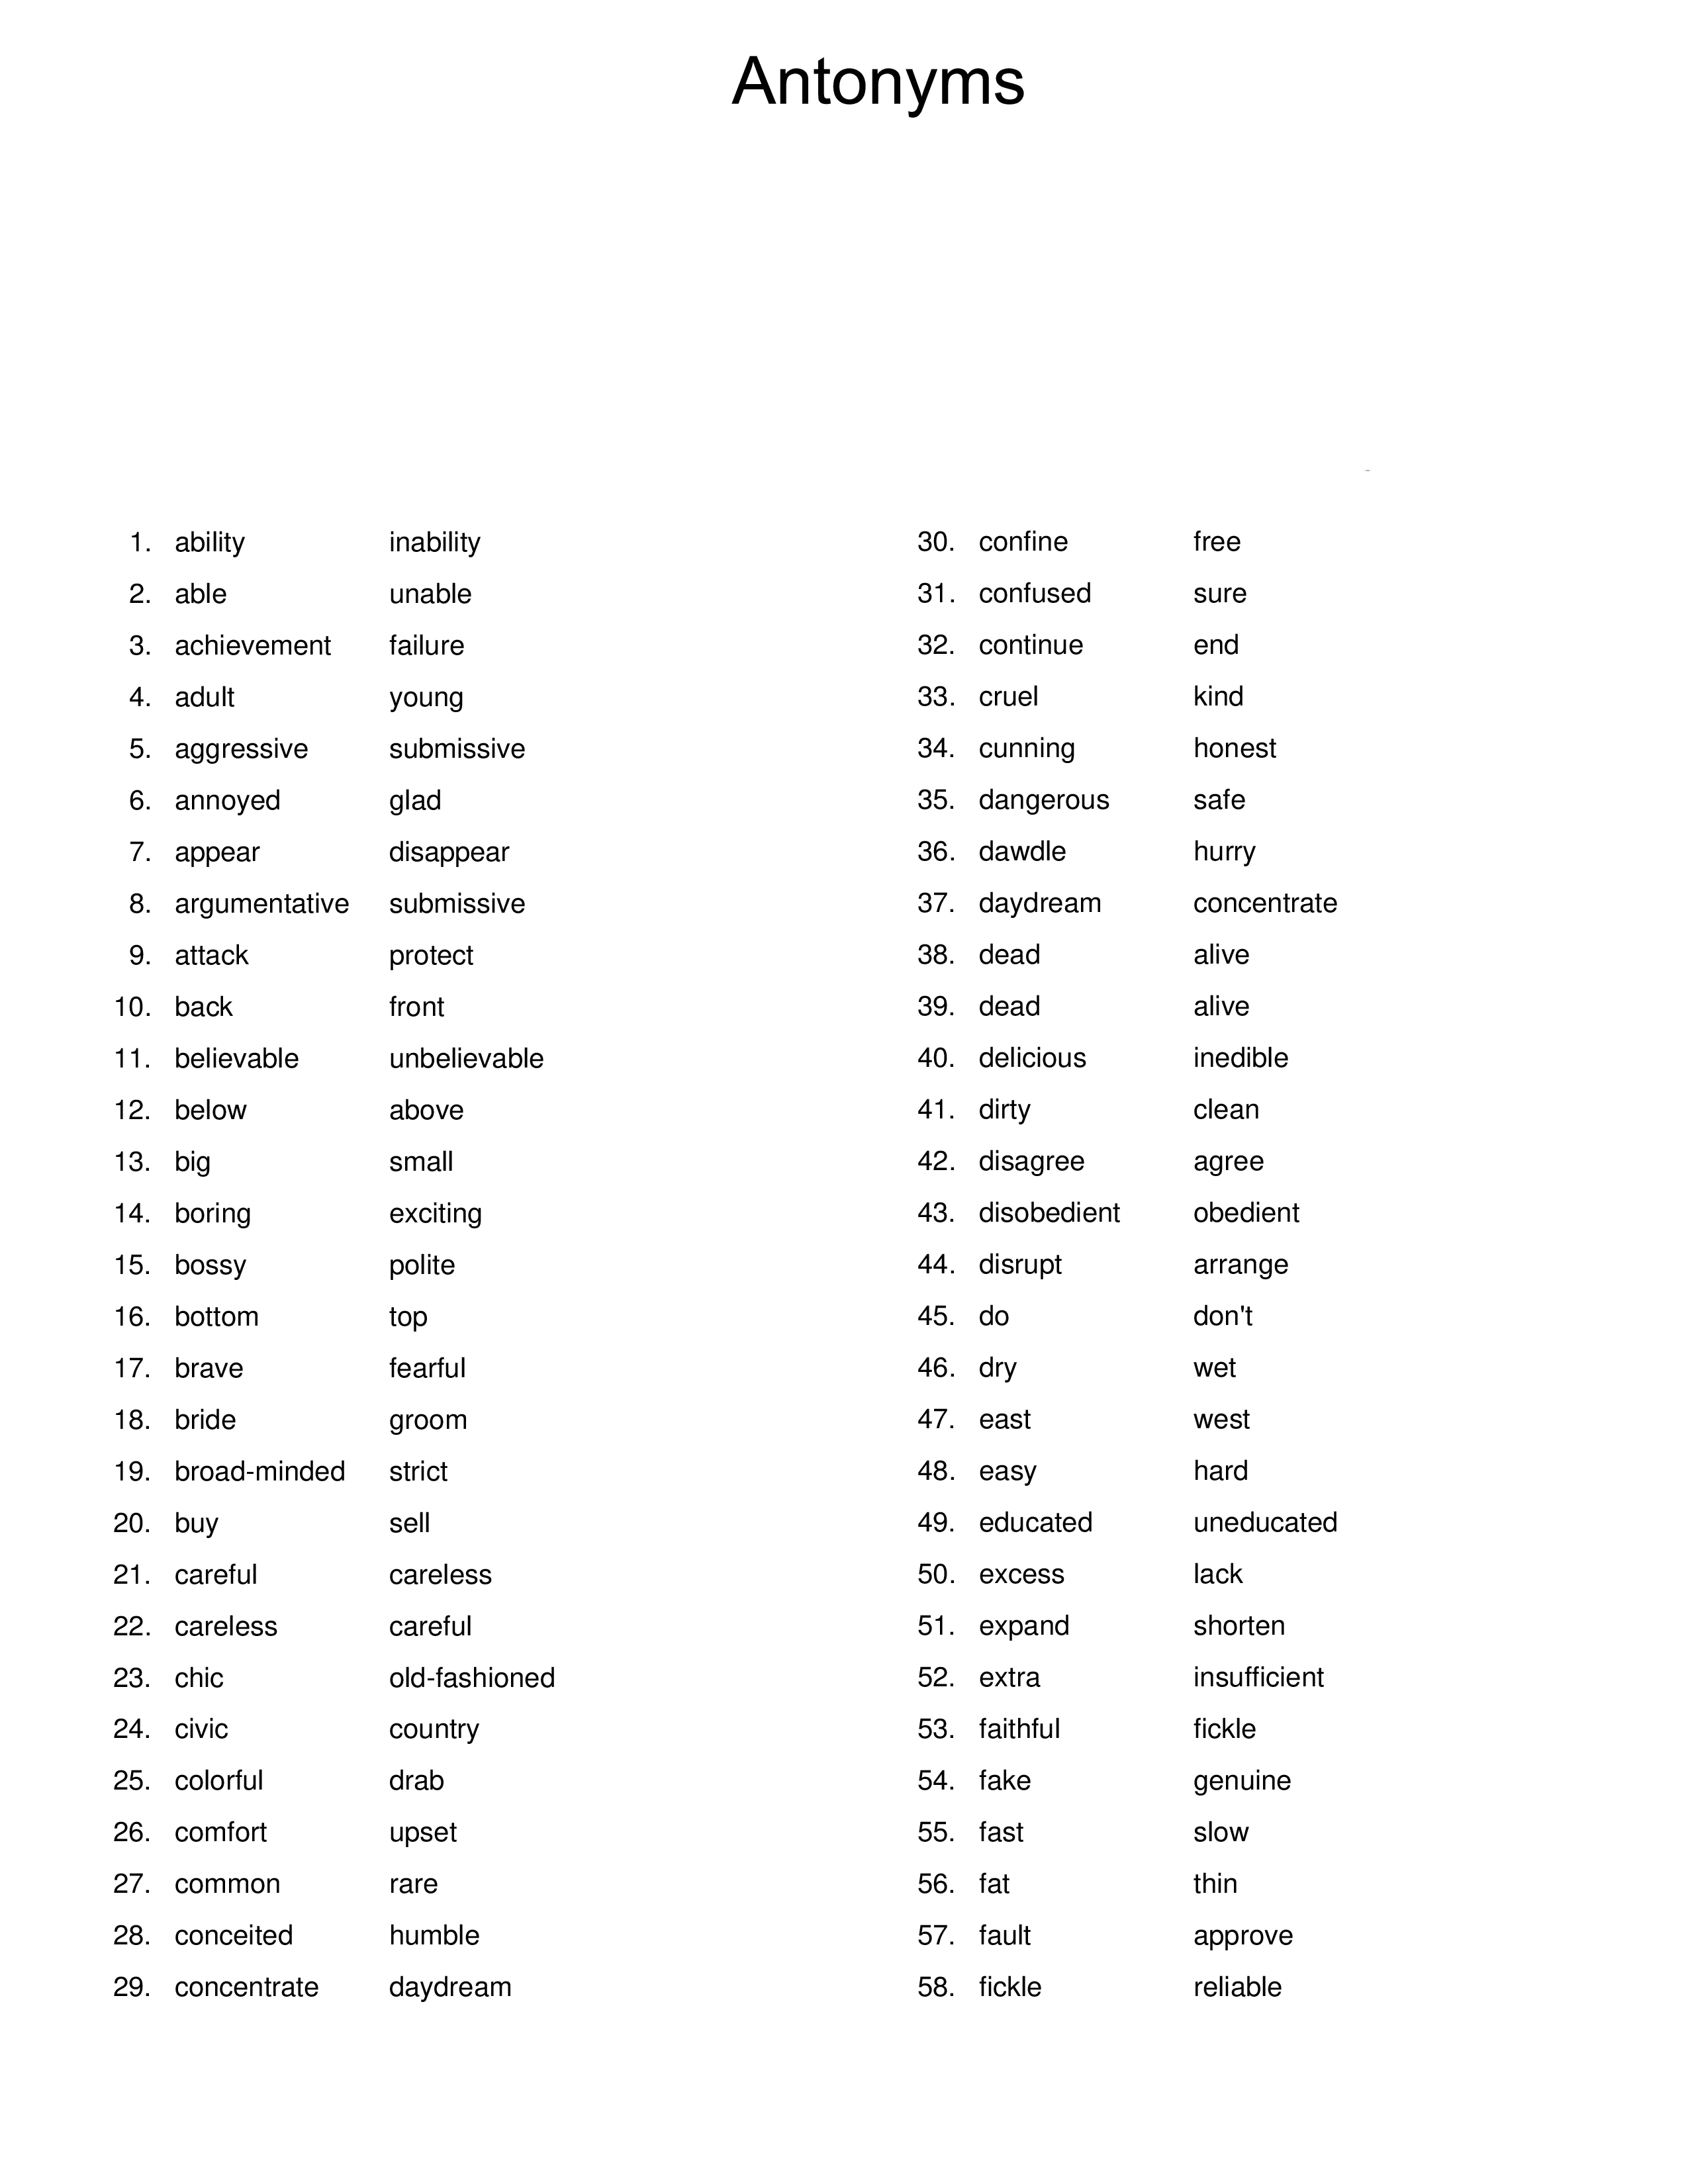 antonyms list template